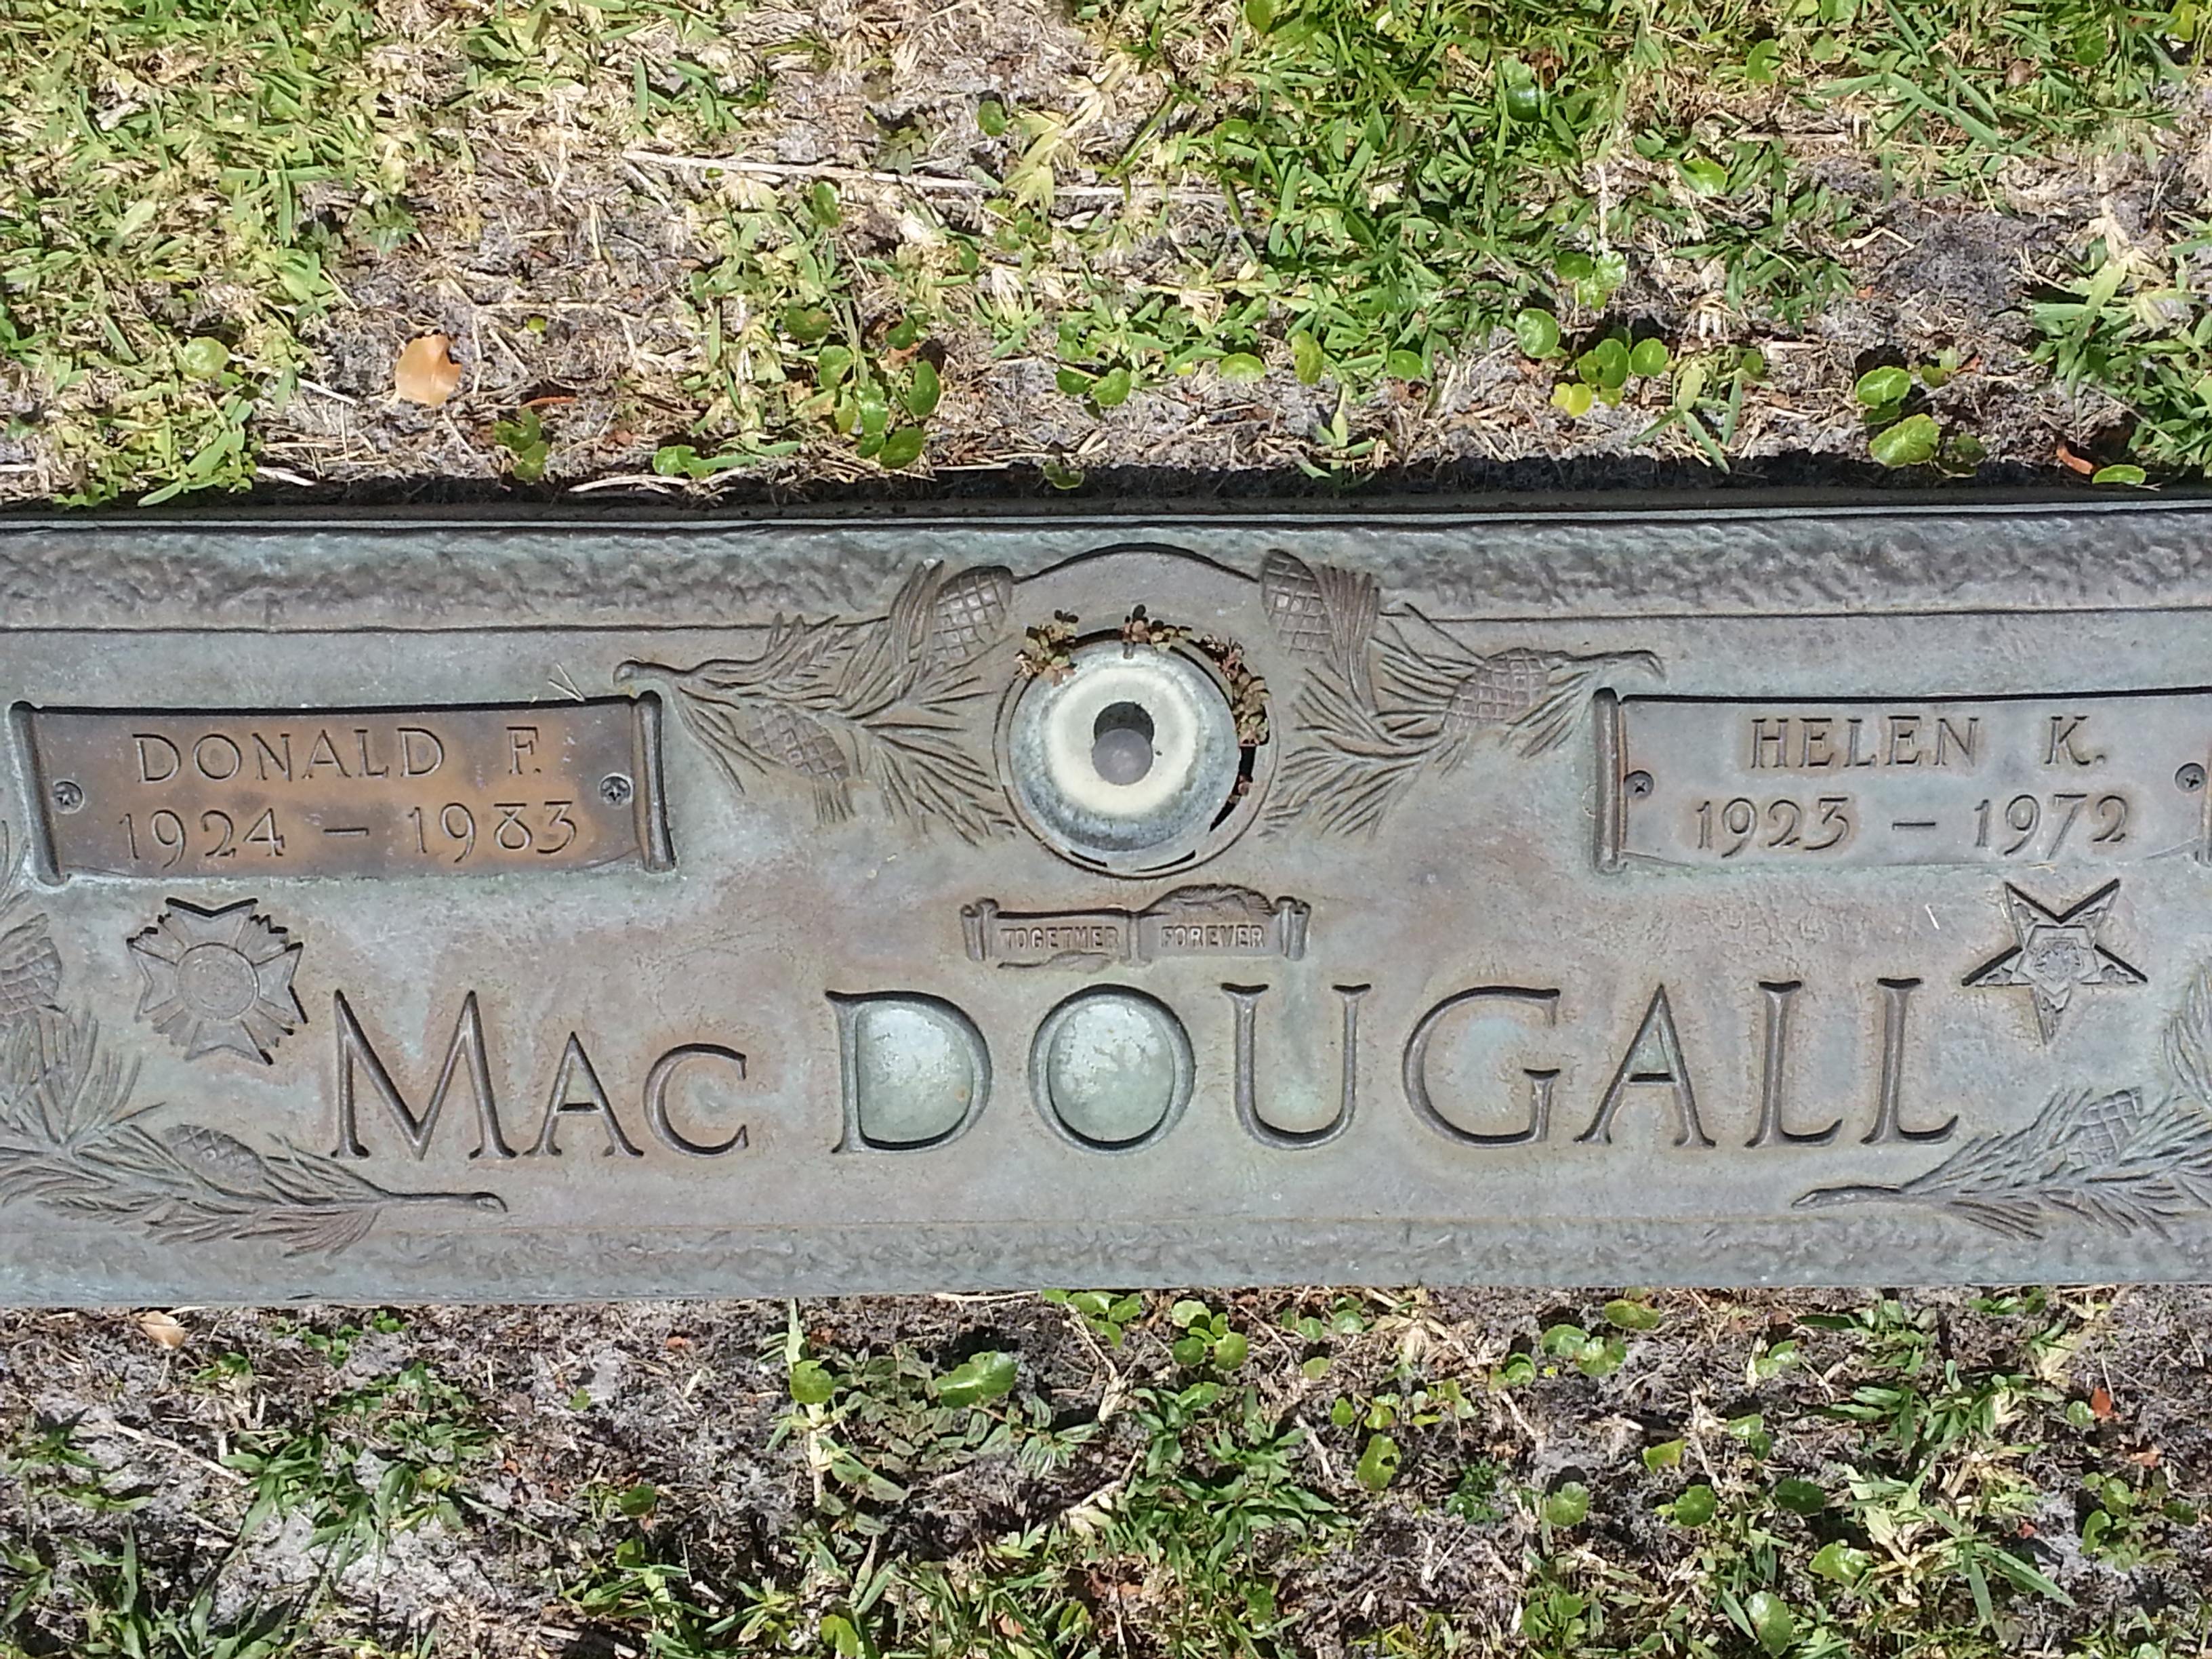 Donald F MacDougall